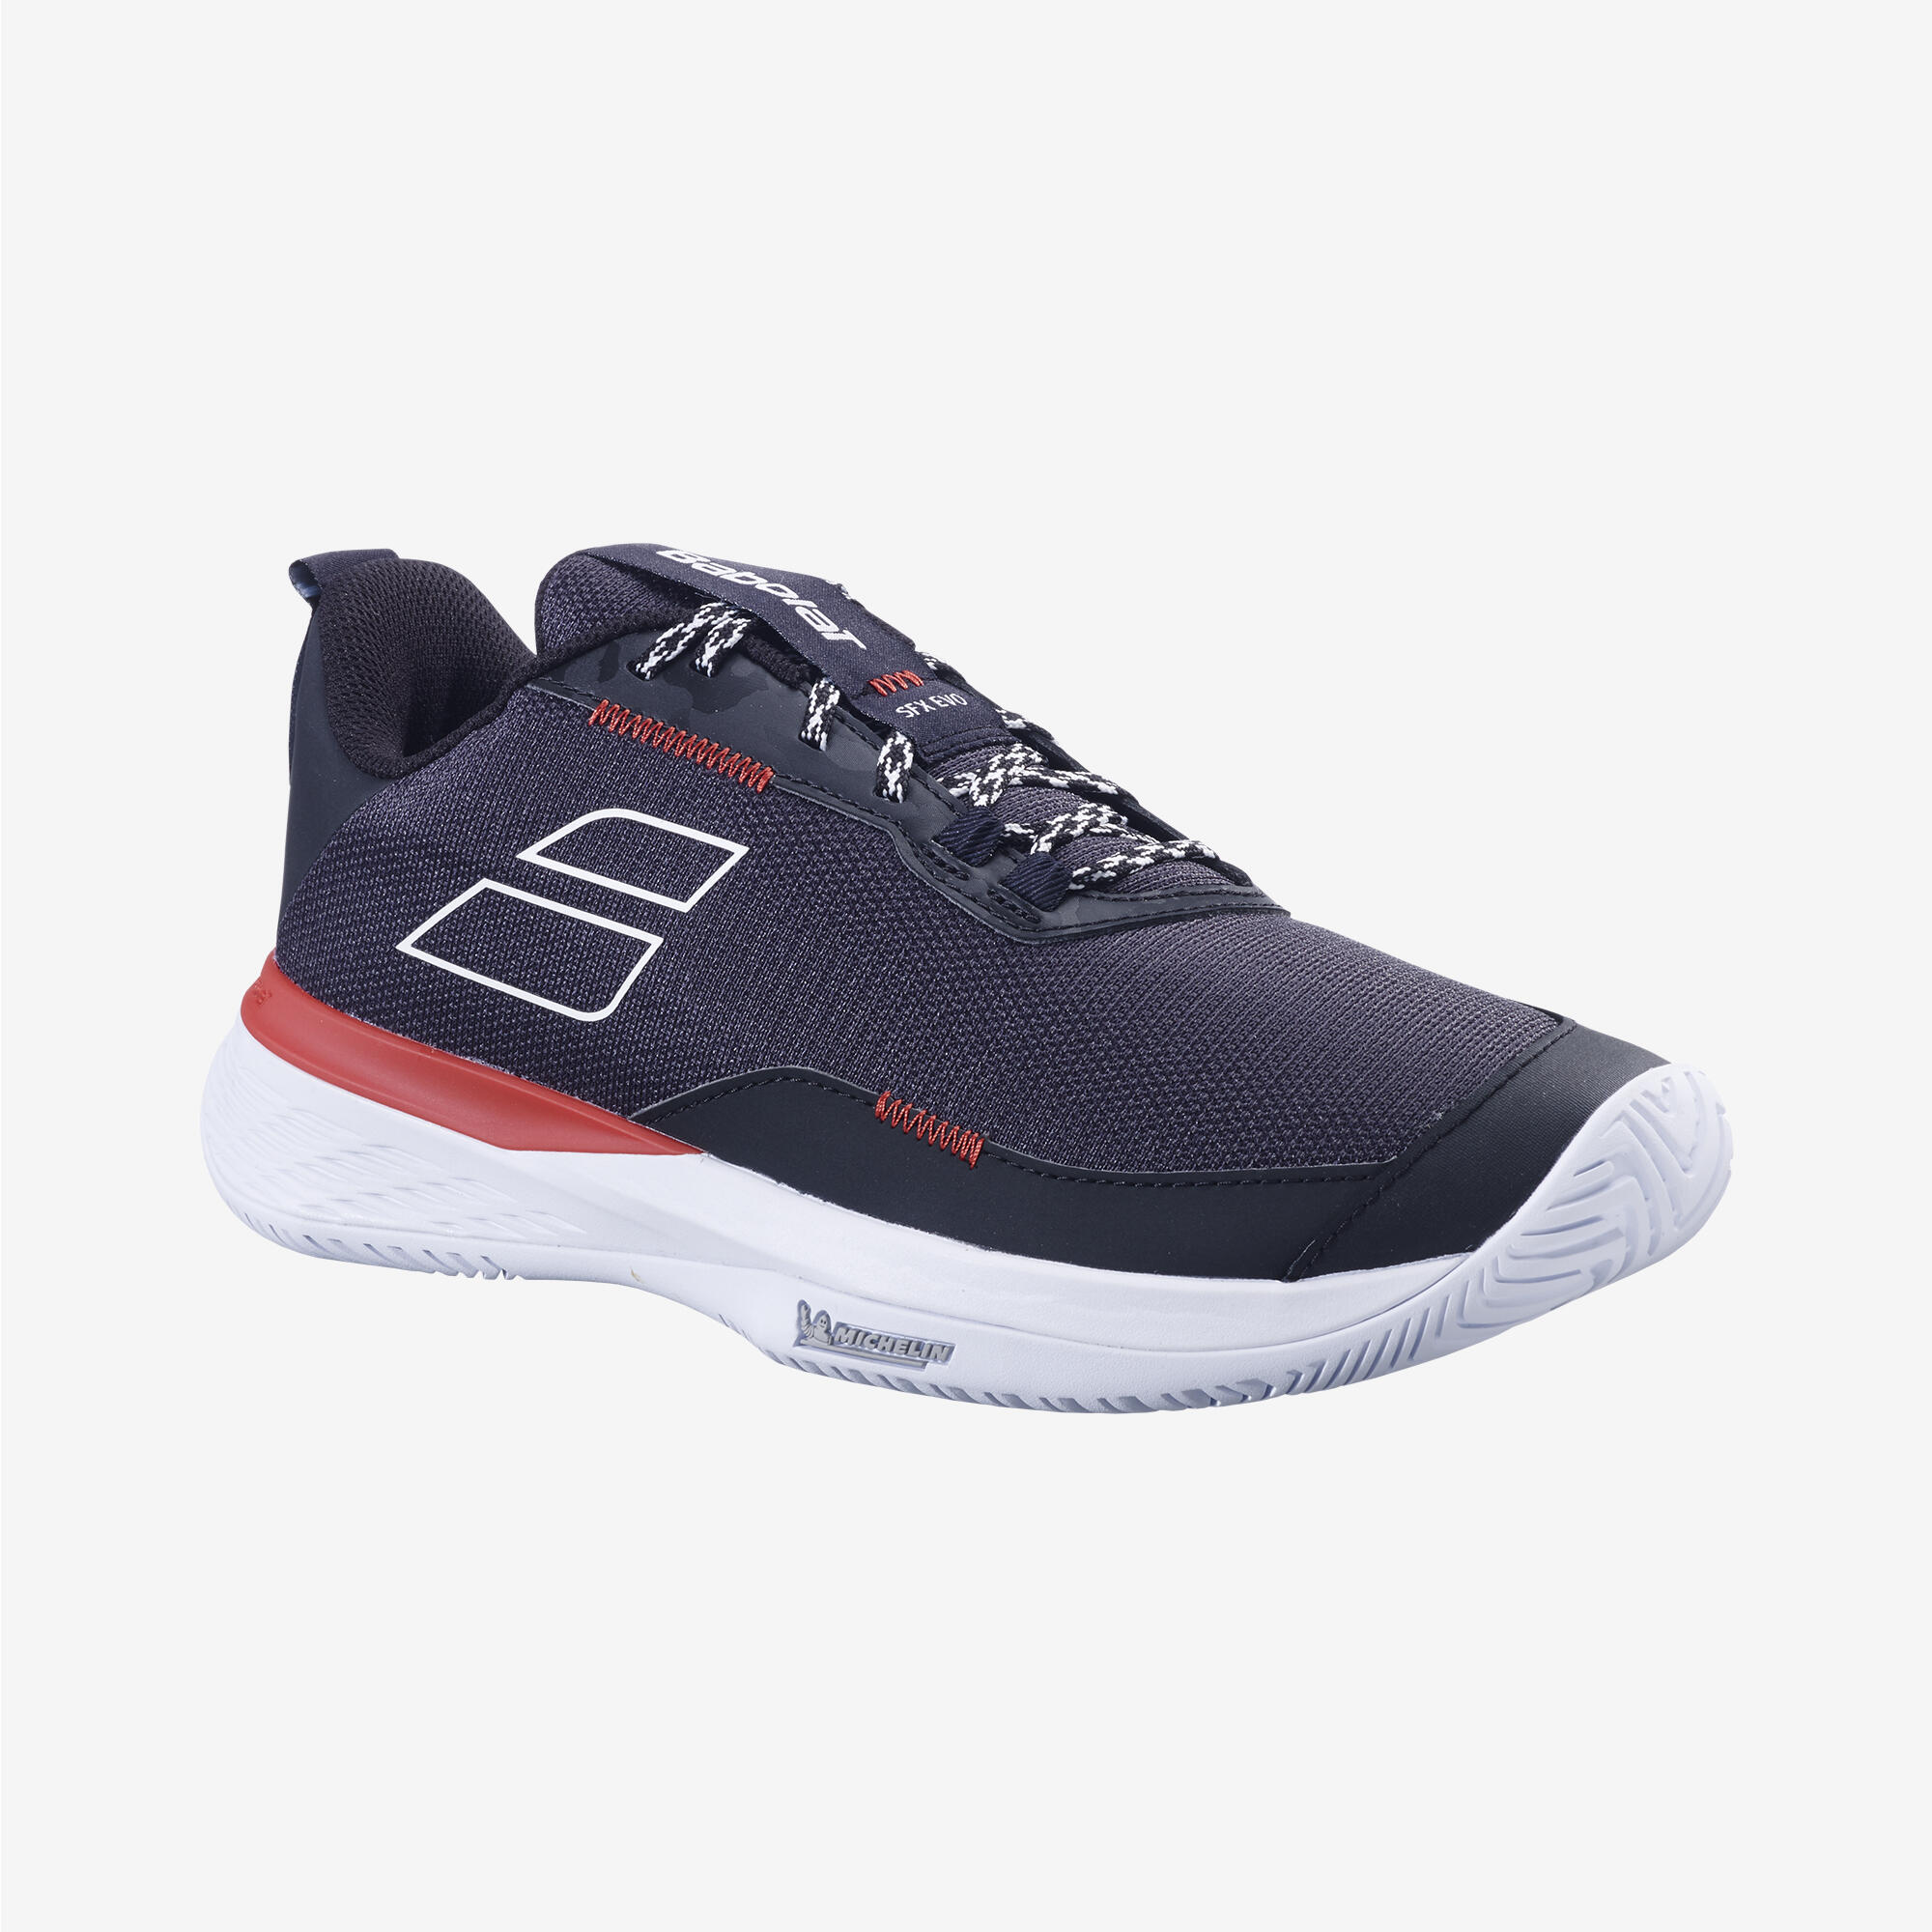 Men's Multicourt Tennis Shoes SFX EVO - Black/Red 4/5